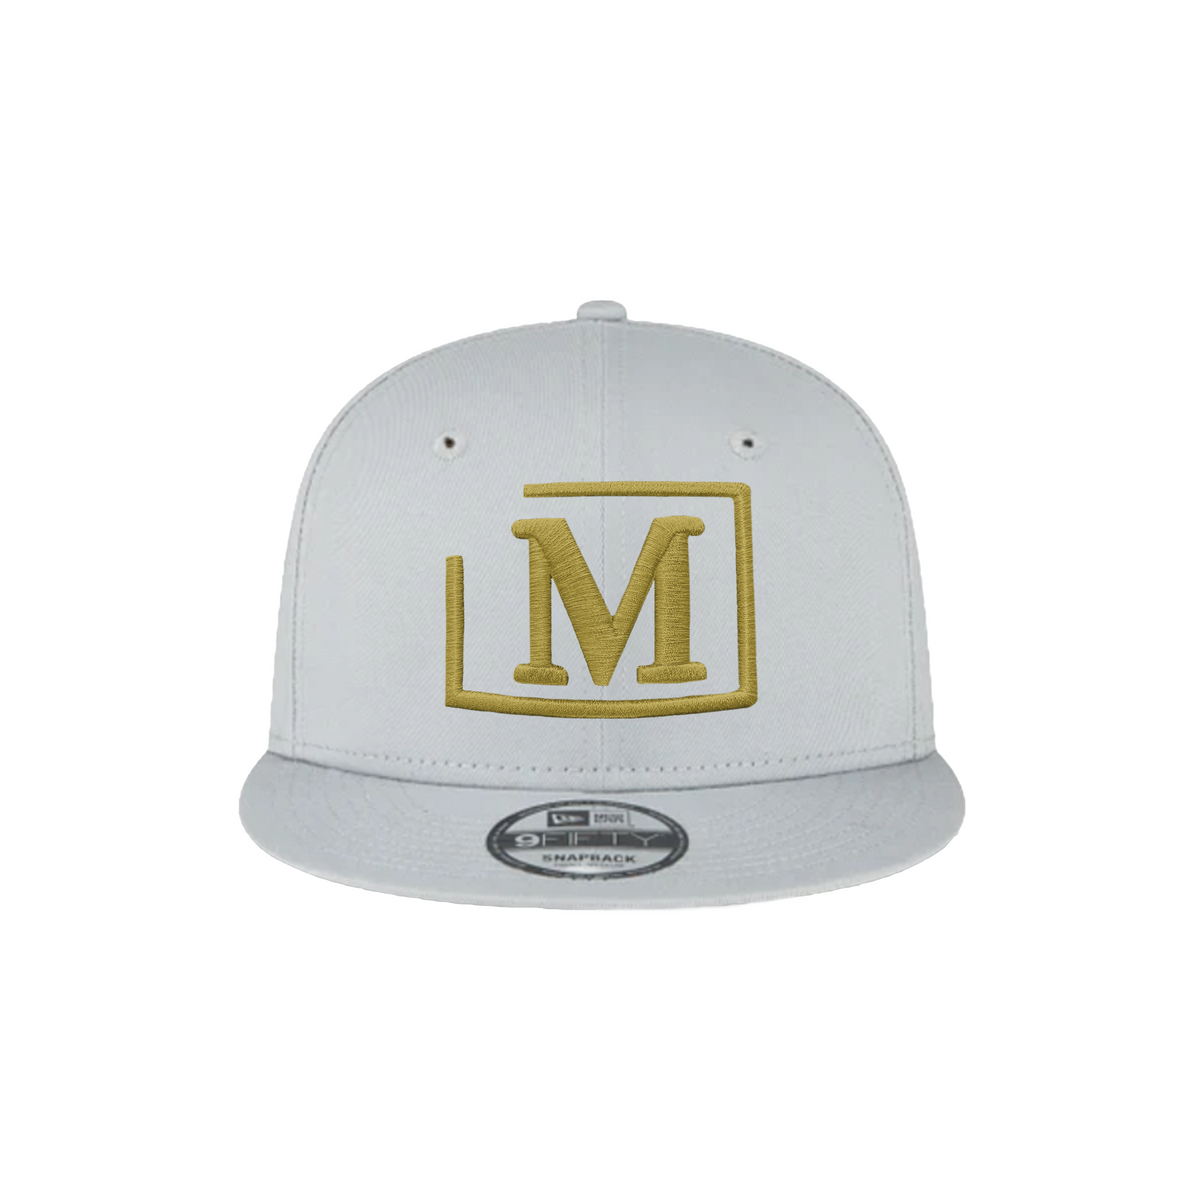 MDB Brand x New Era 9Fifty Snapback Embroidered Baseball Cap - White